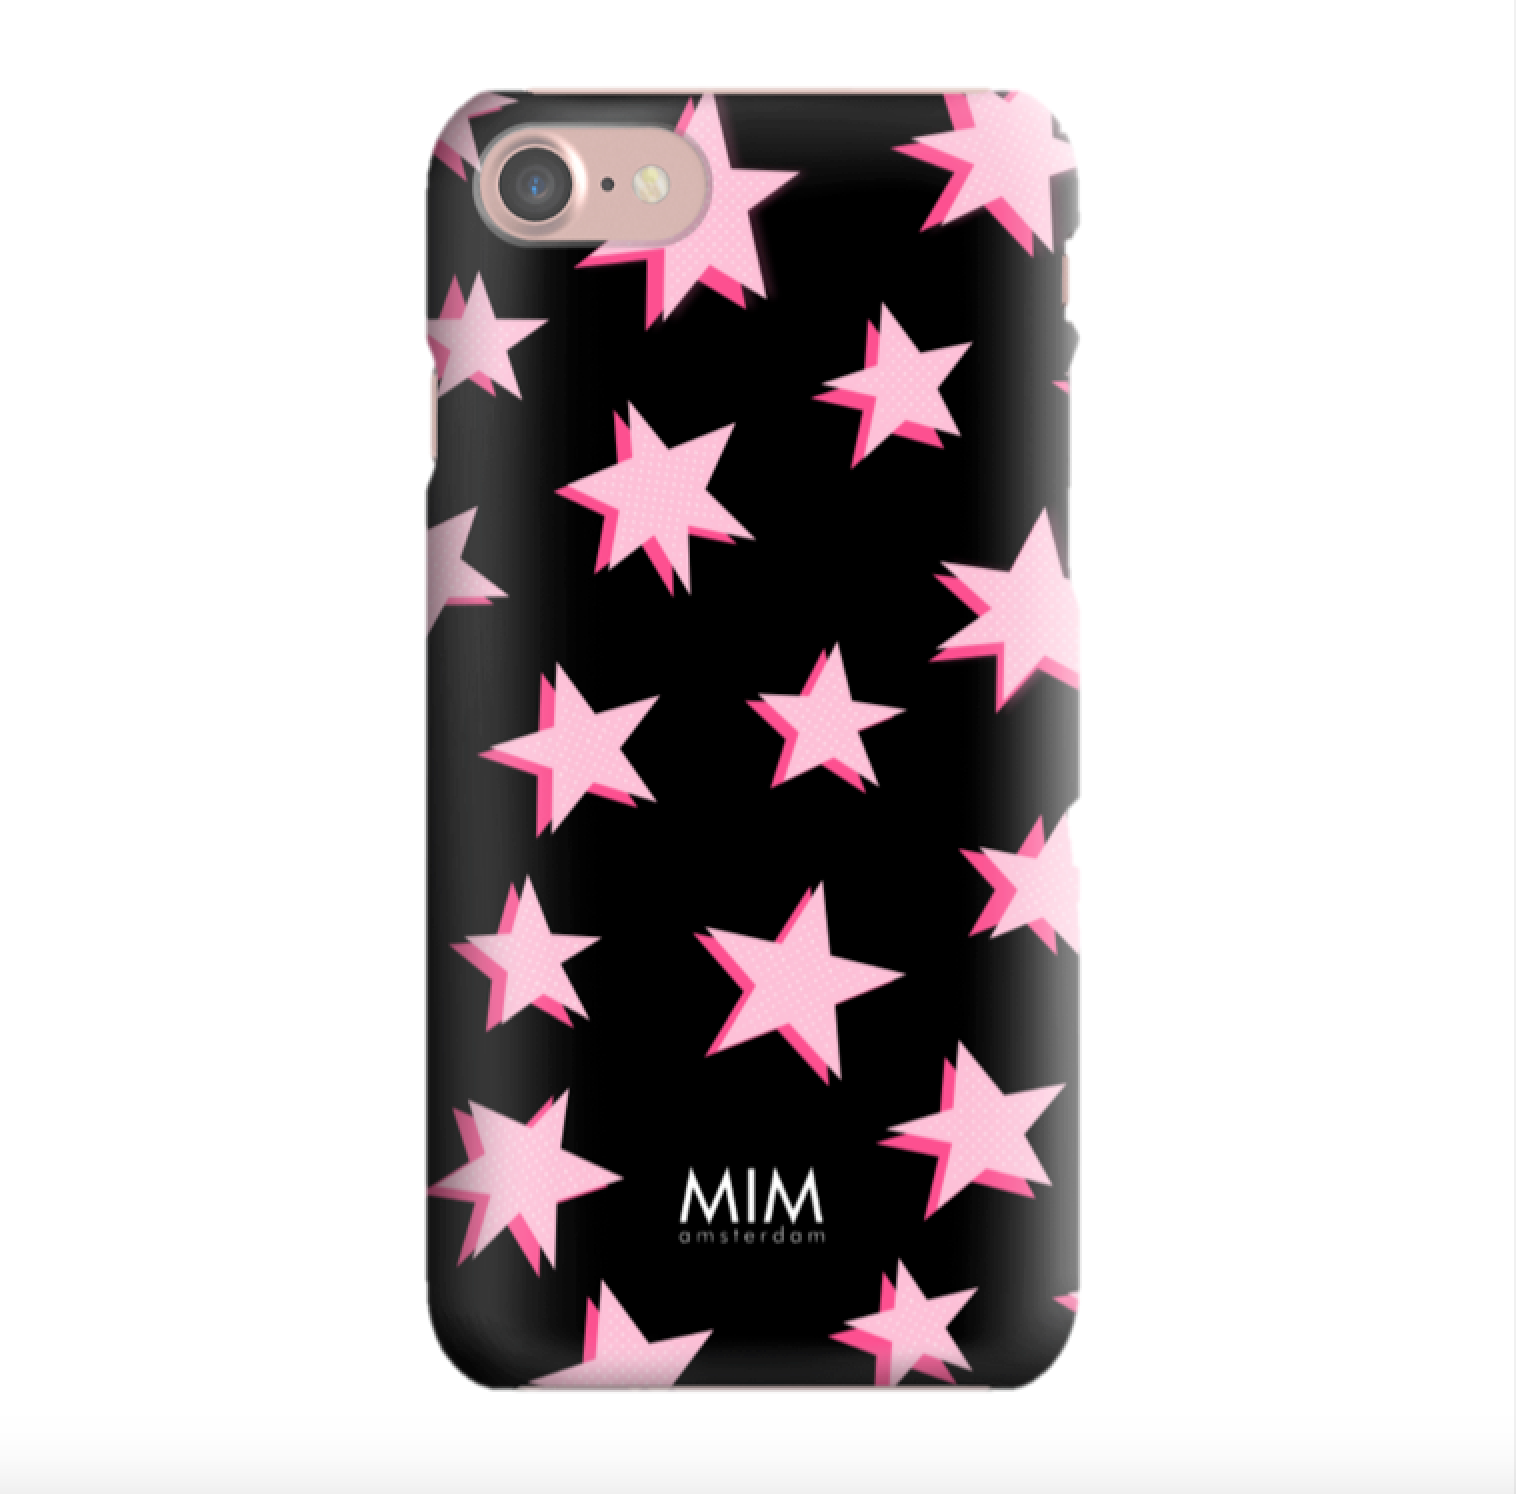 Zwart hardcase iPhone met roze sterren MIM Amsterdam - MIM Amsterdam